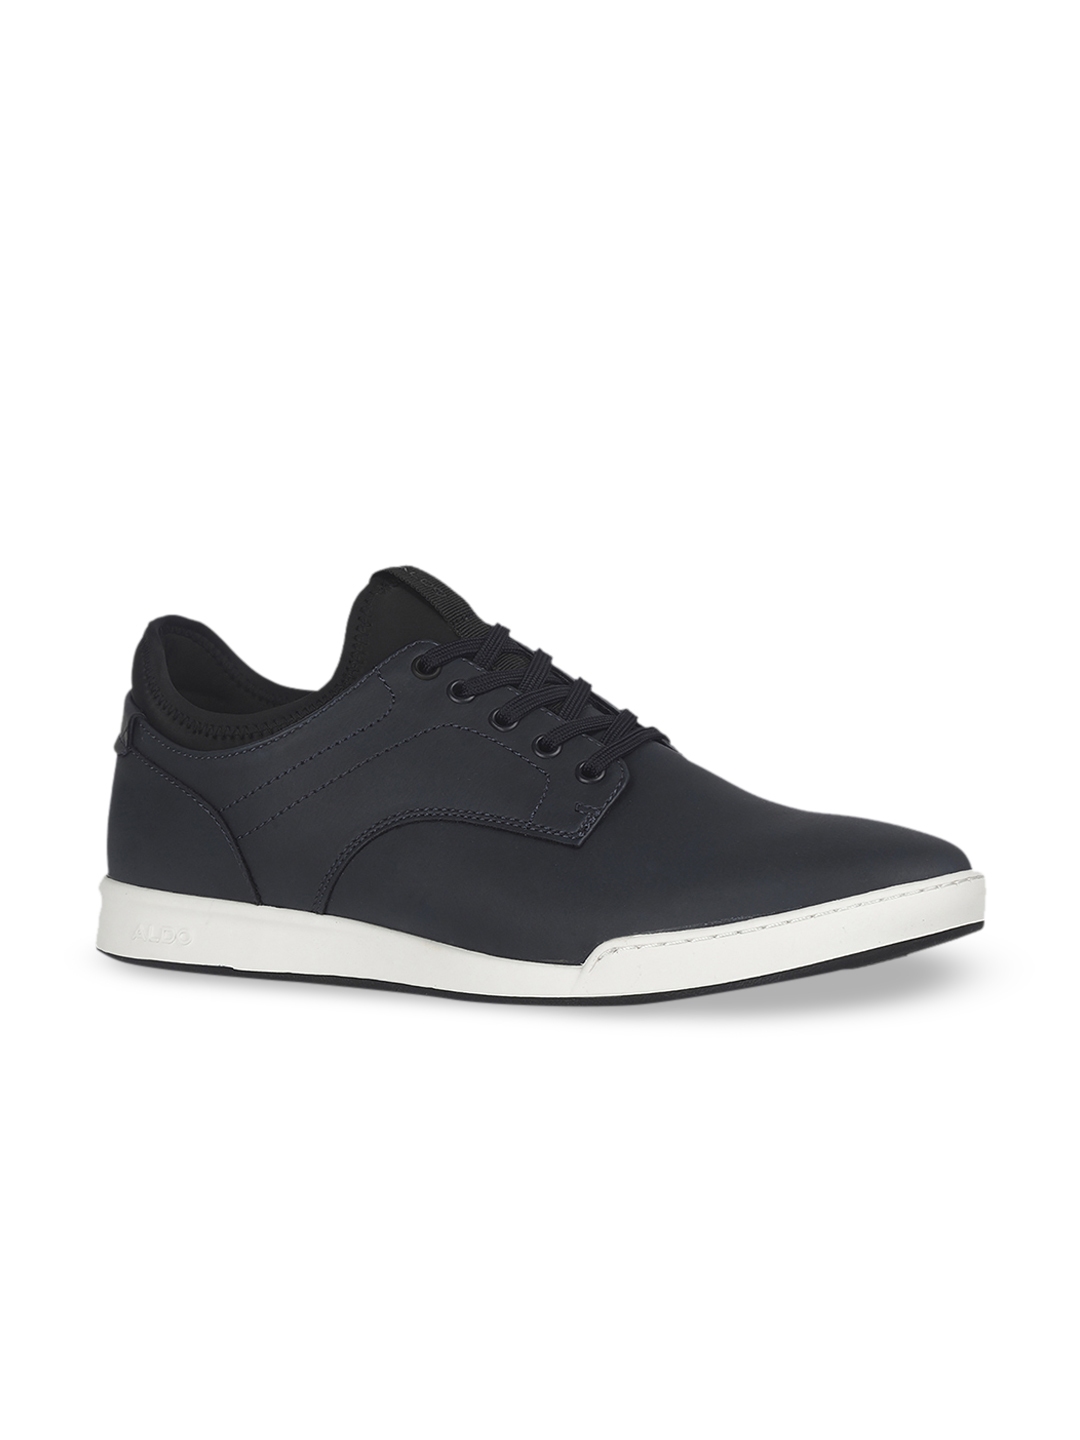 Buy ALDO Men Navy Blue Sneakers - Casual Shoes for Men 10942558 | Myntra